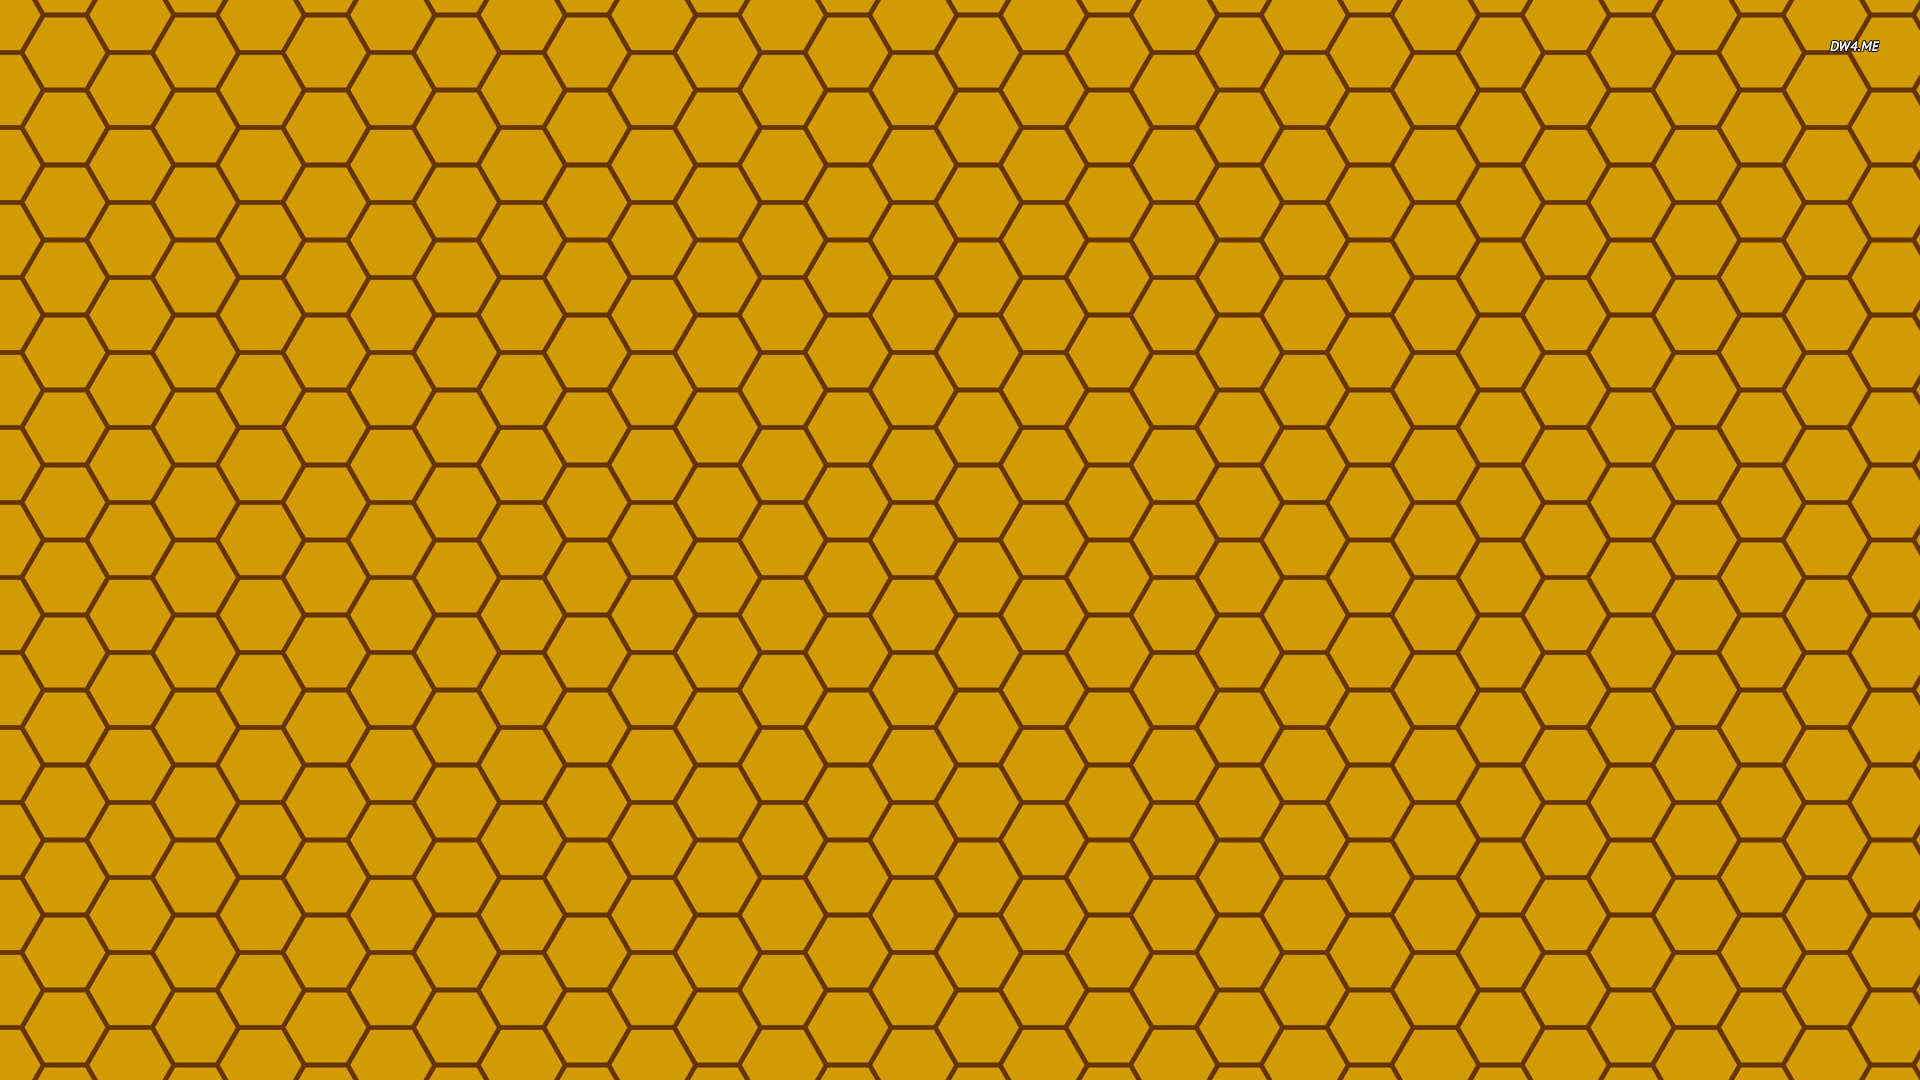 avernum 6 honeycomb horrors